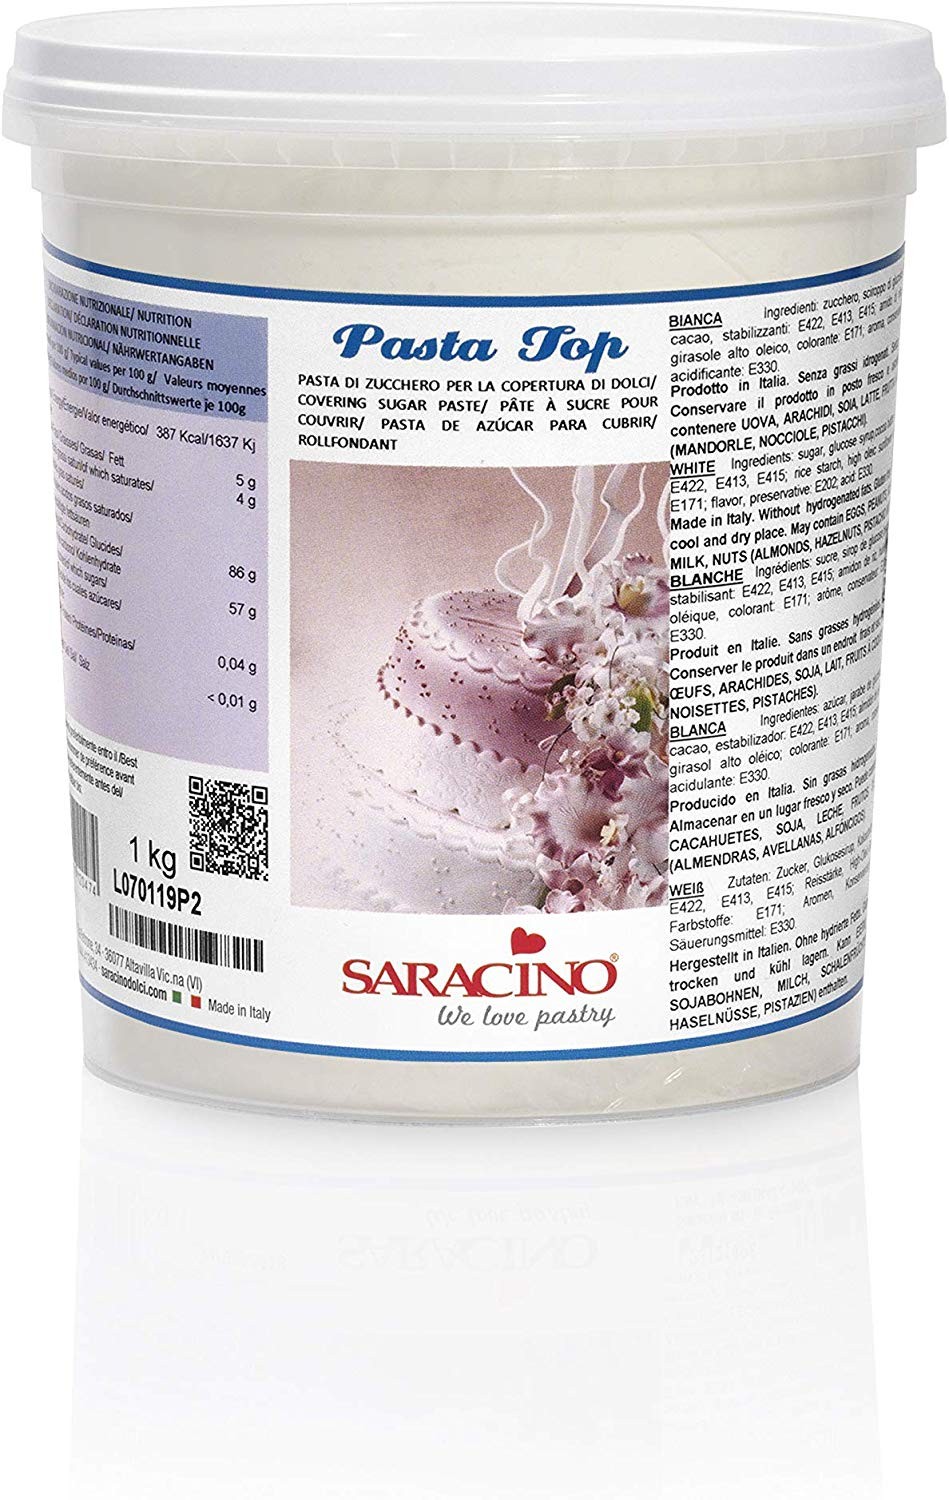 https://www.decorazionidolci.it/2974/pasta-di-zucchero-saracino-top-bianca.jpg